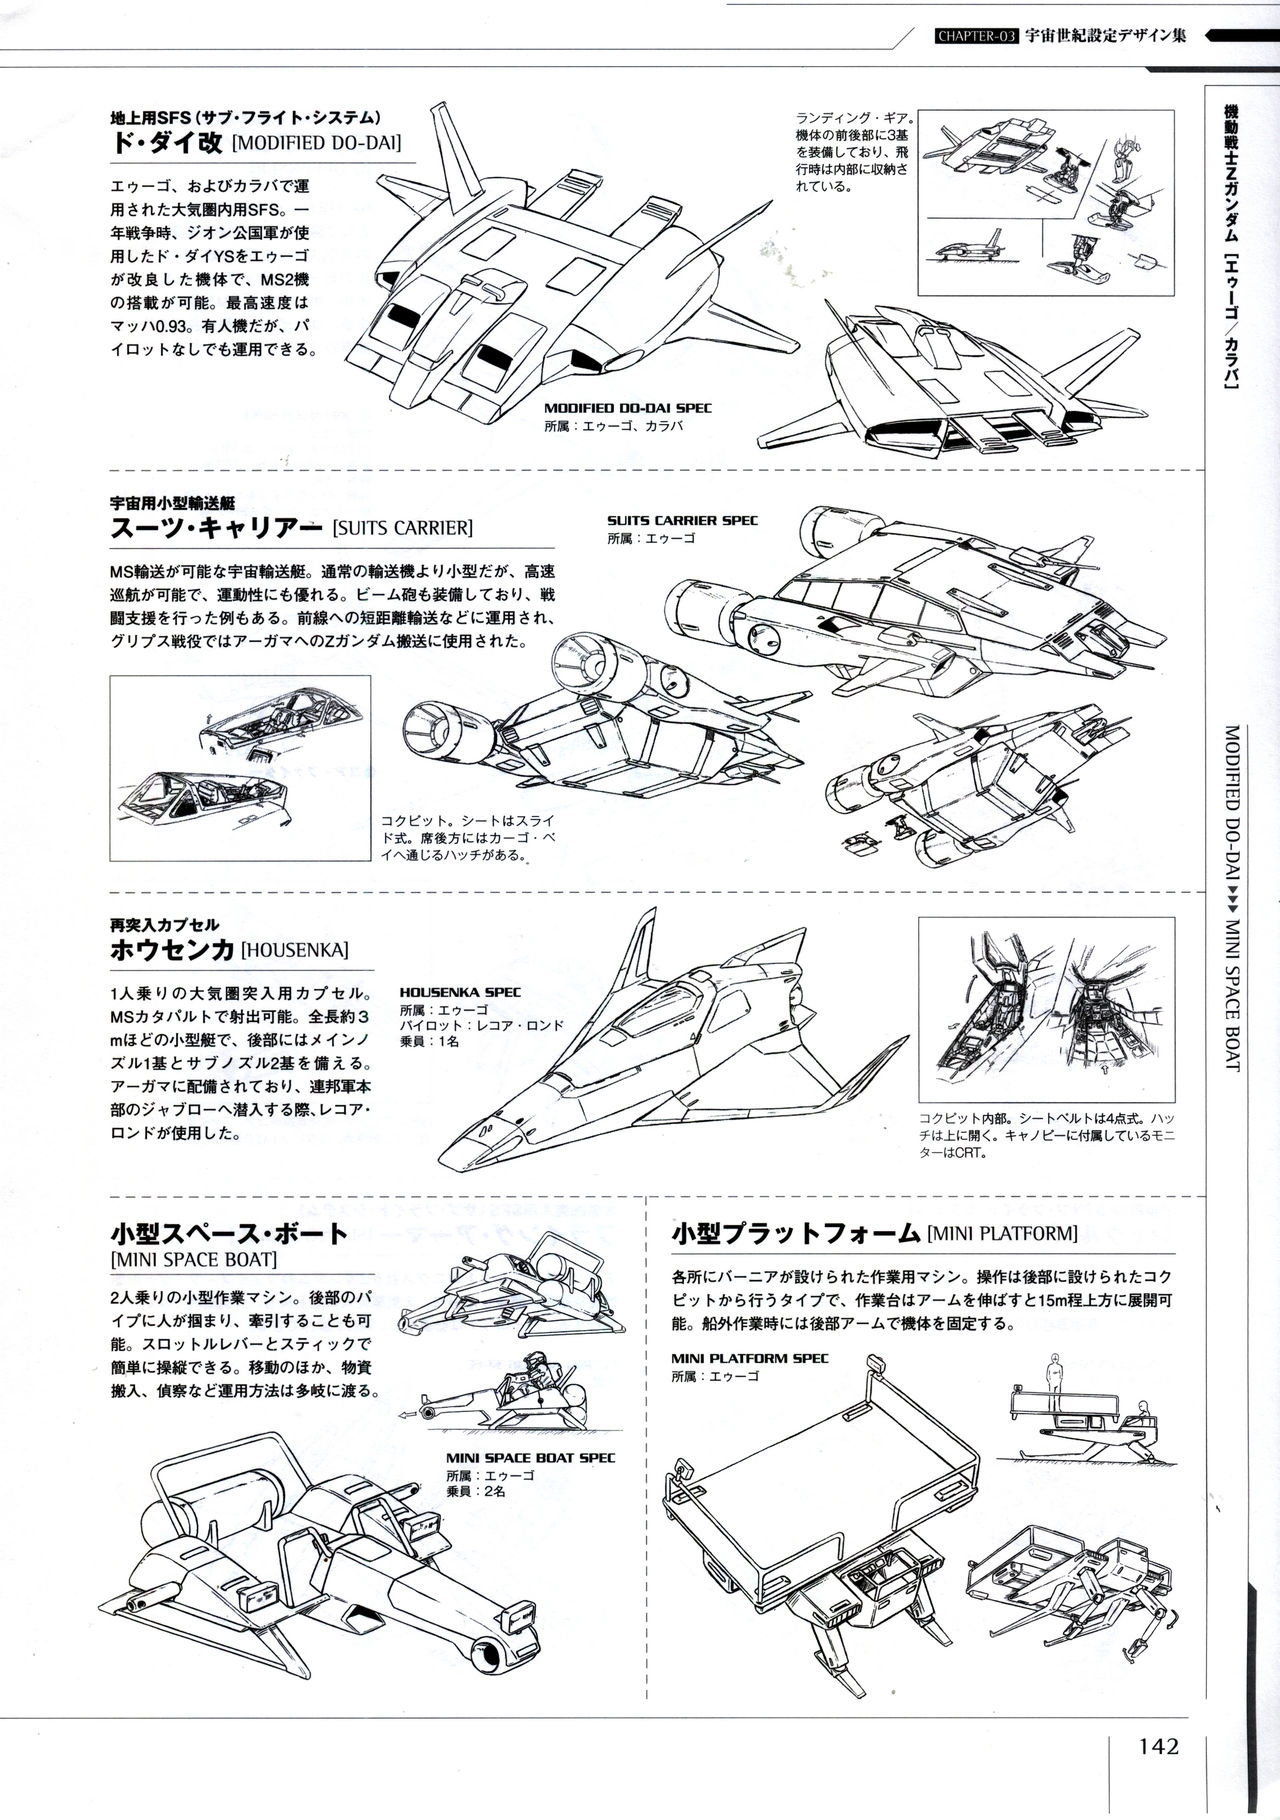 Mobile Suit Gundam - Ship & Aerospace Plane Encyclopedia - Revised Edition 147